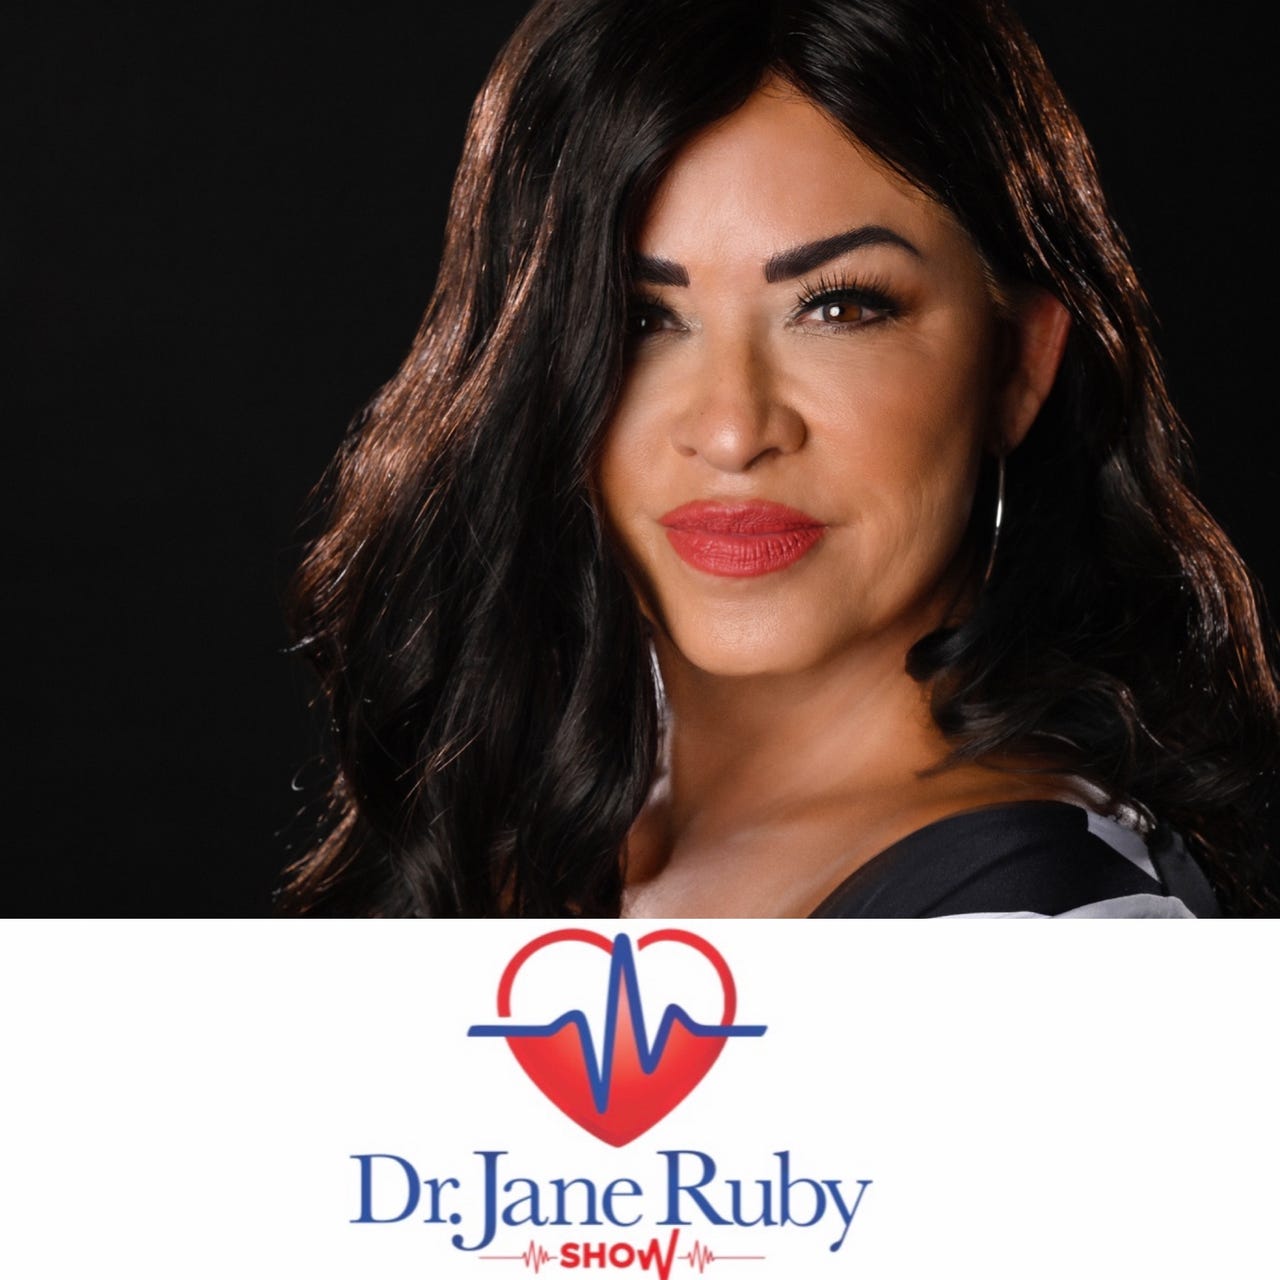 Dr. Jane Ruby's Truth In Medicine